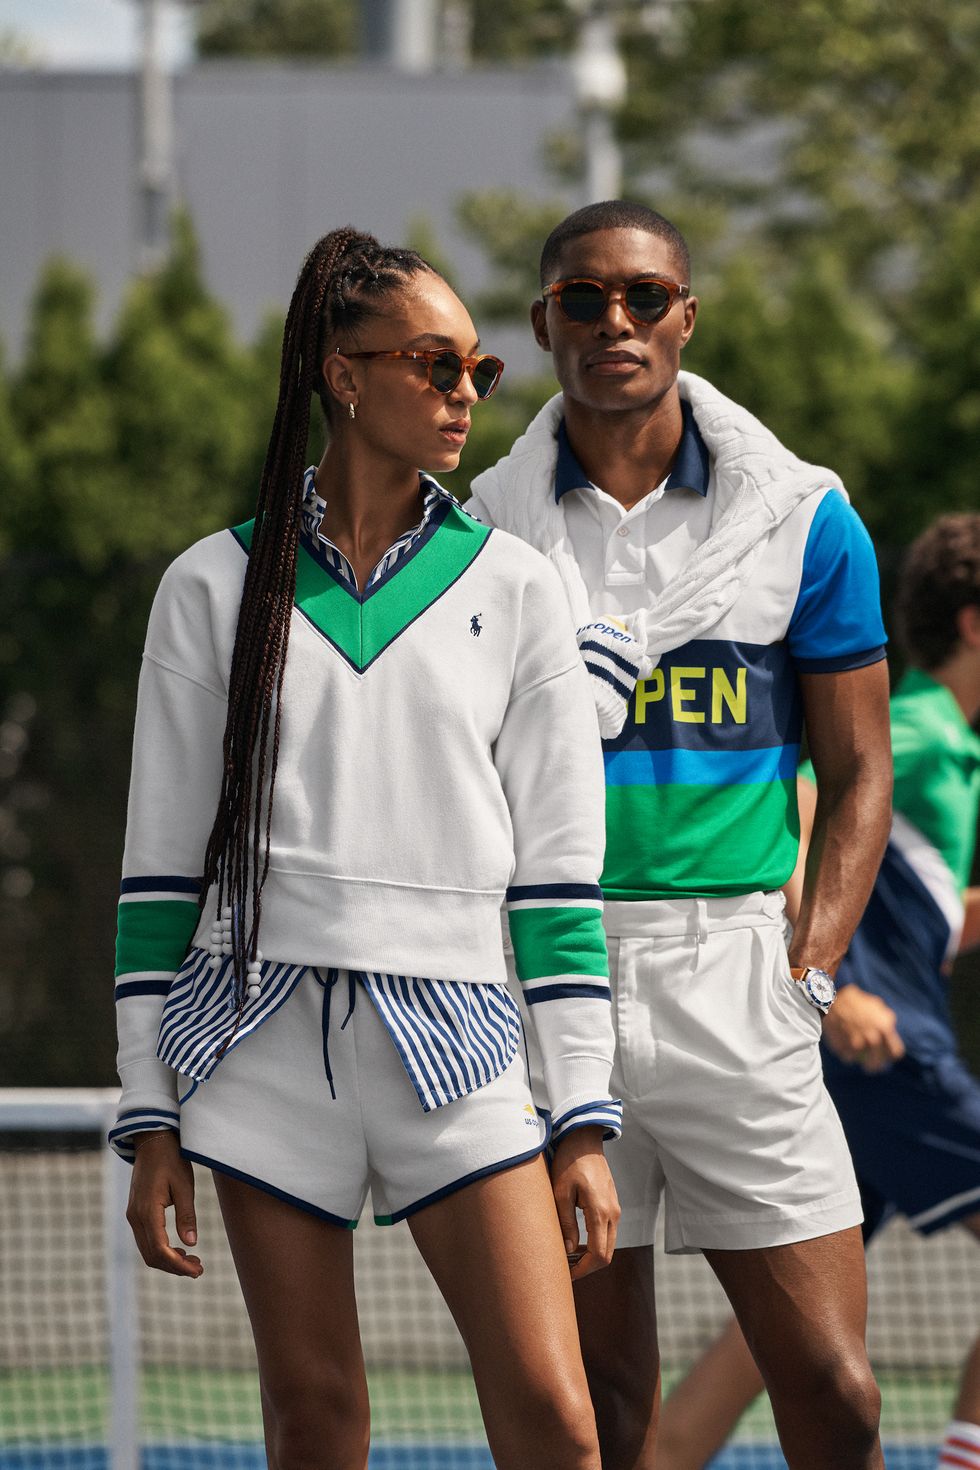 The Stylish, Very Ralph Lauren Scene At Wimbledon This Weekend